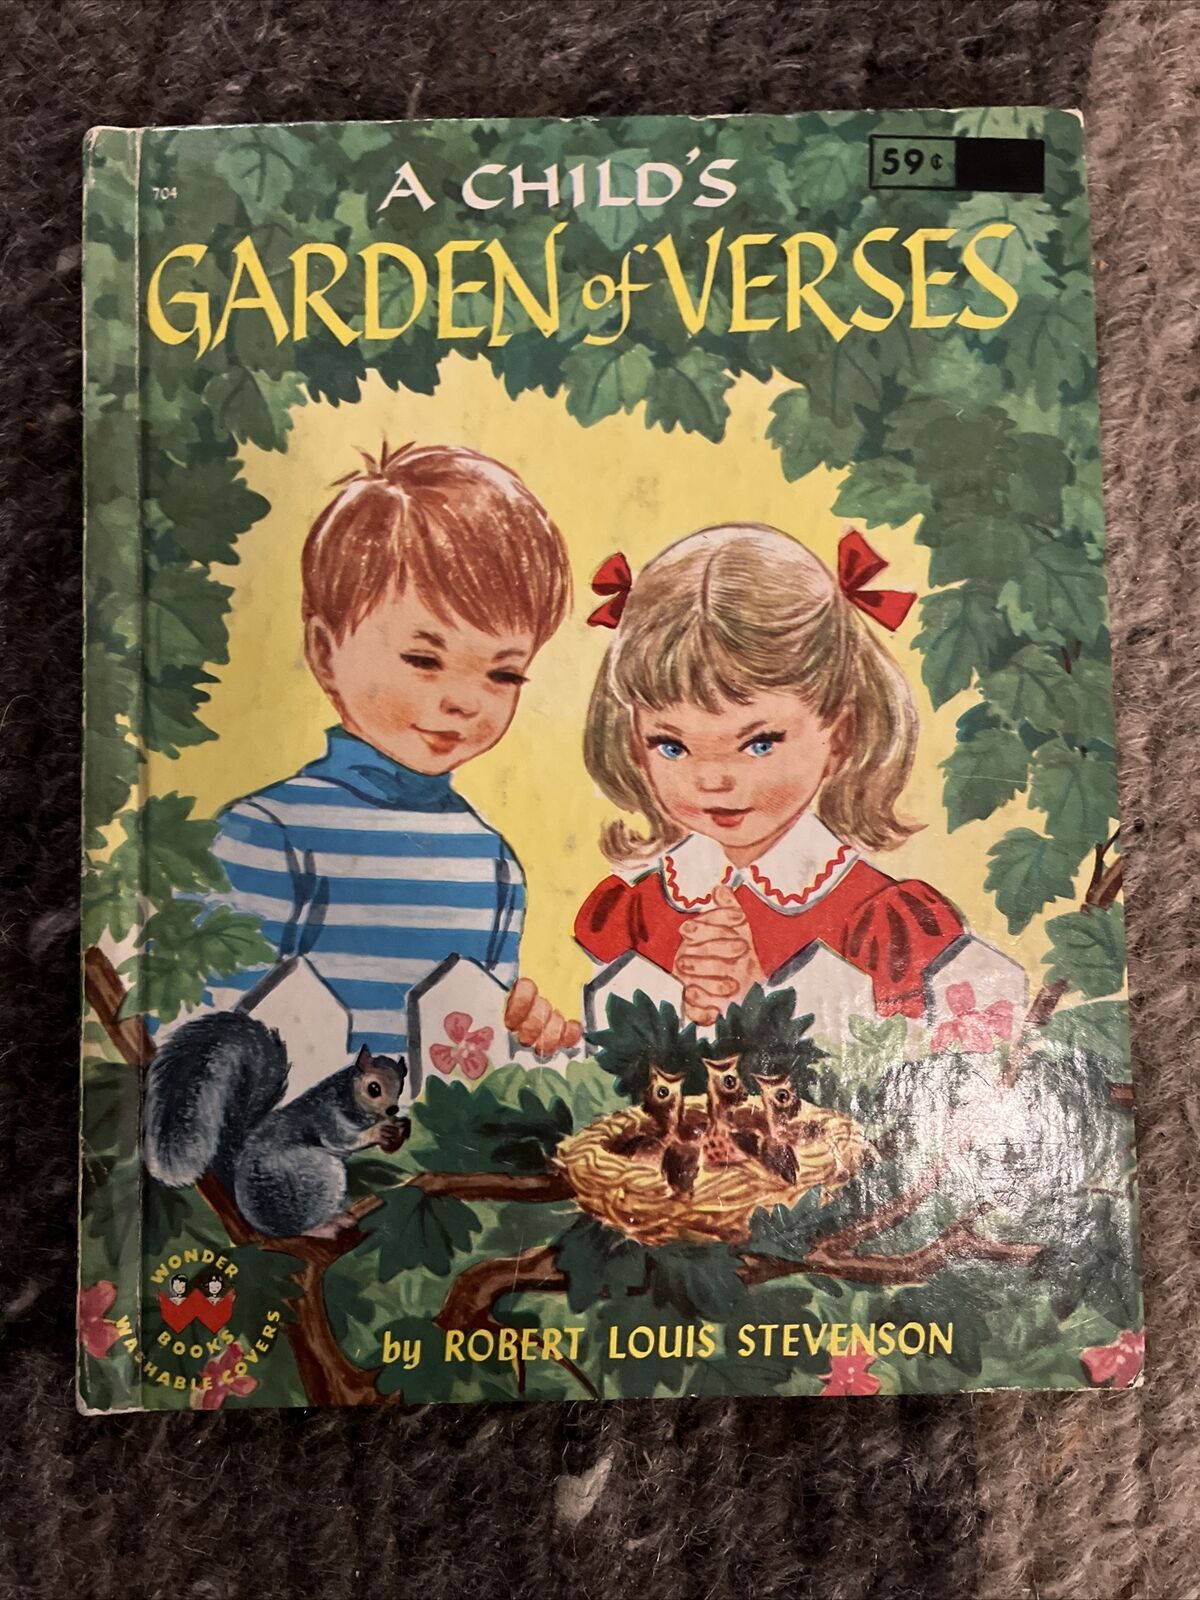 1976 vintage book “ A Child’s Garden of Verses” By Robert Louis Stevenson